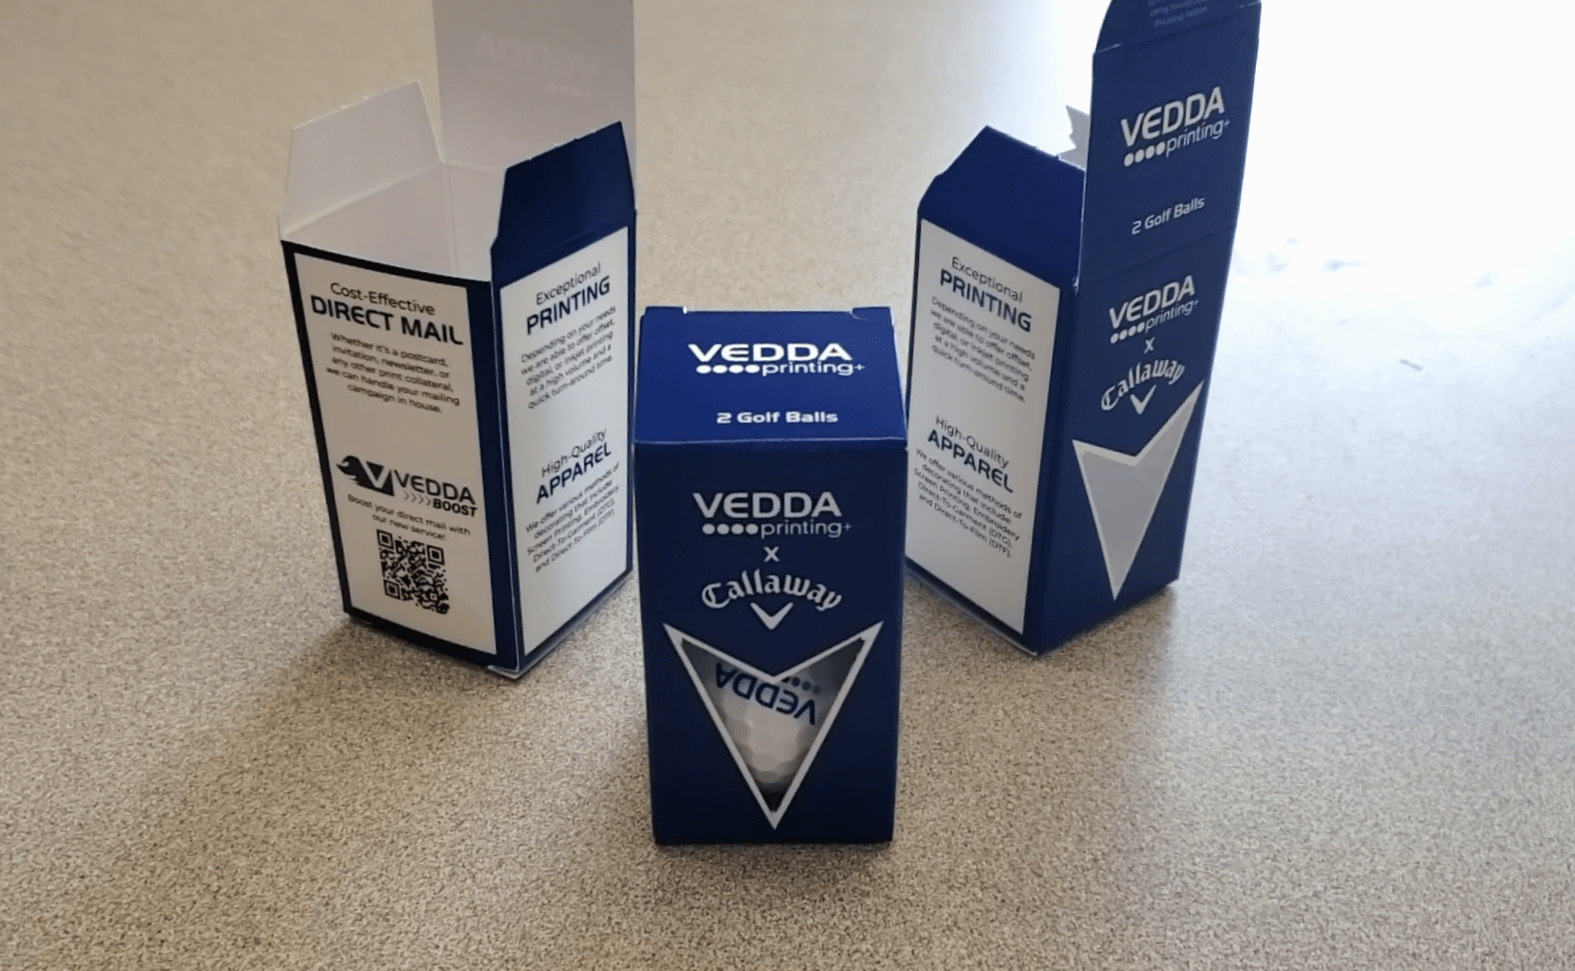 Display of Vedda Printing's golf ball packaging